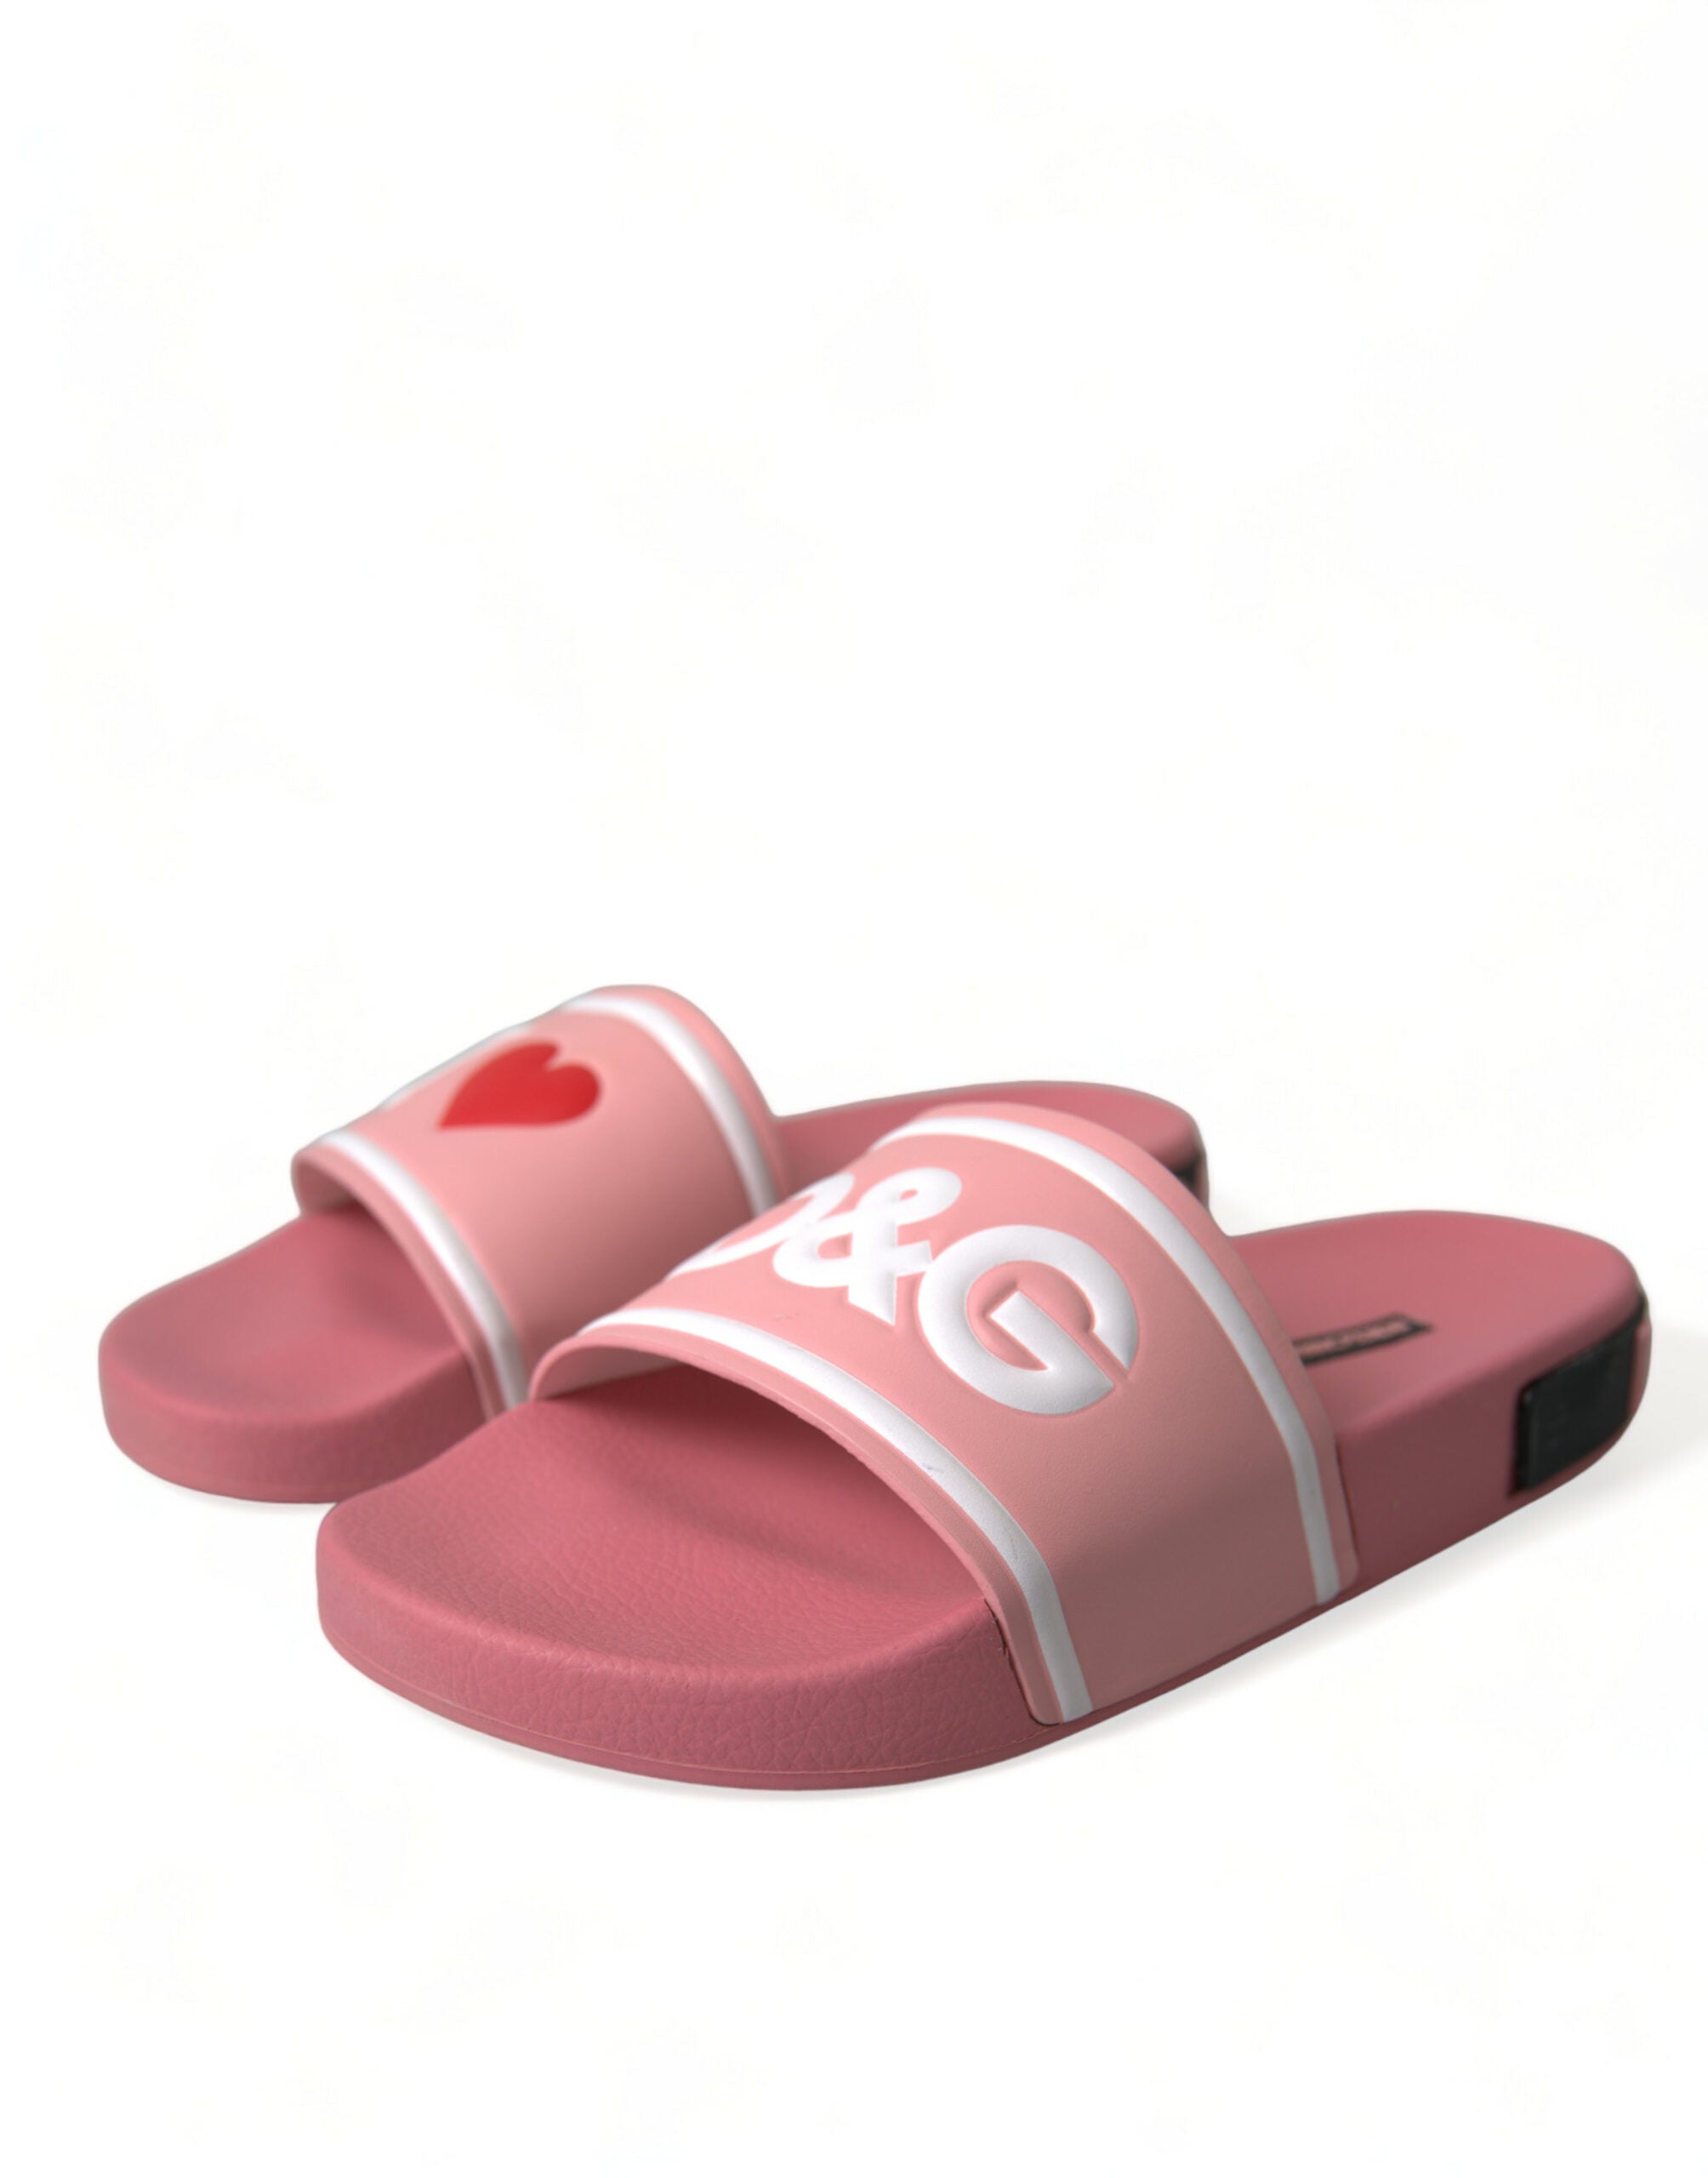 Dolce & Gabbana Chic Pink Calf Leather Slide Flats